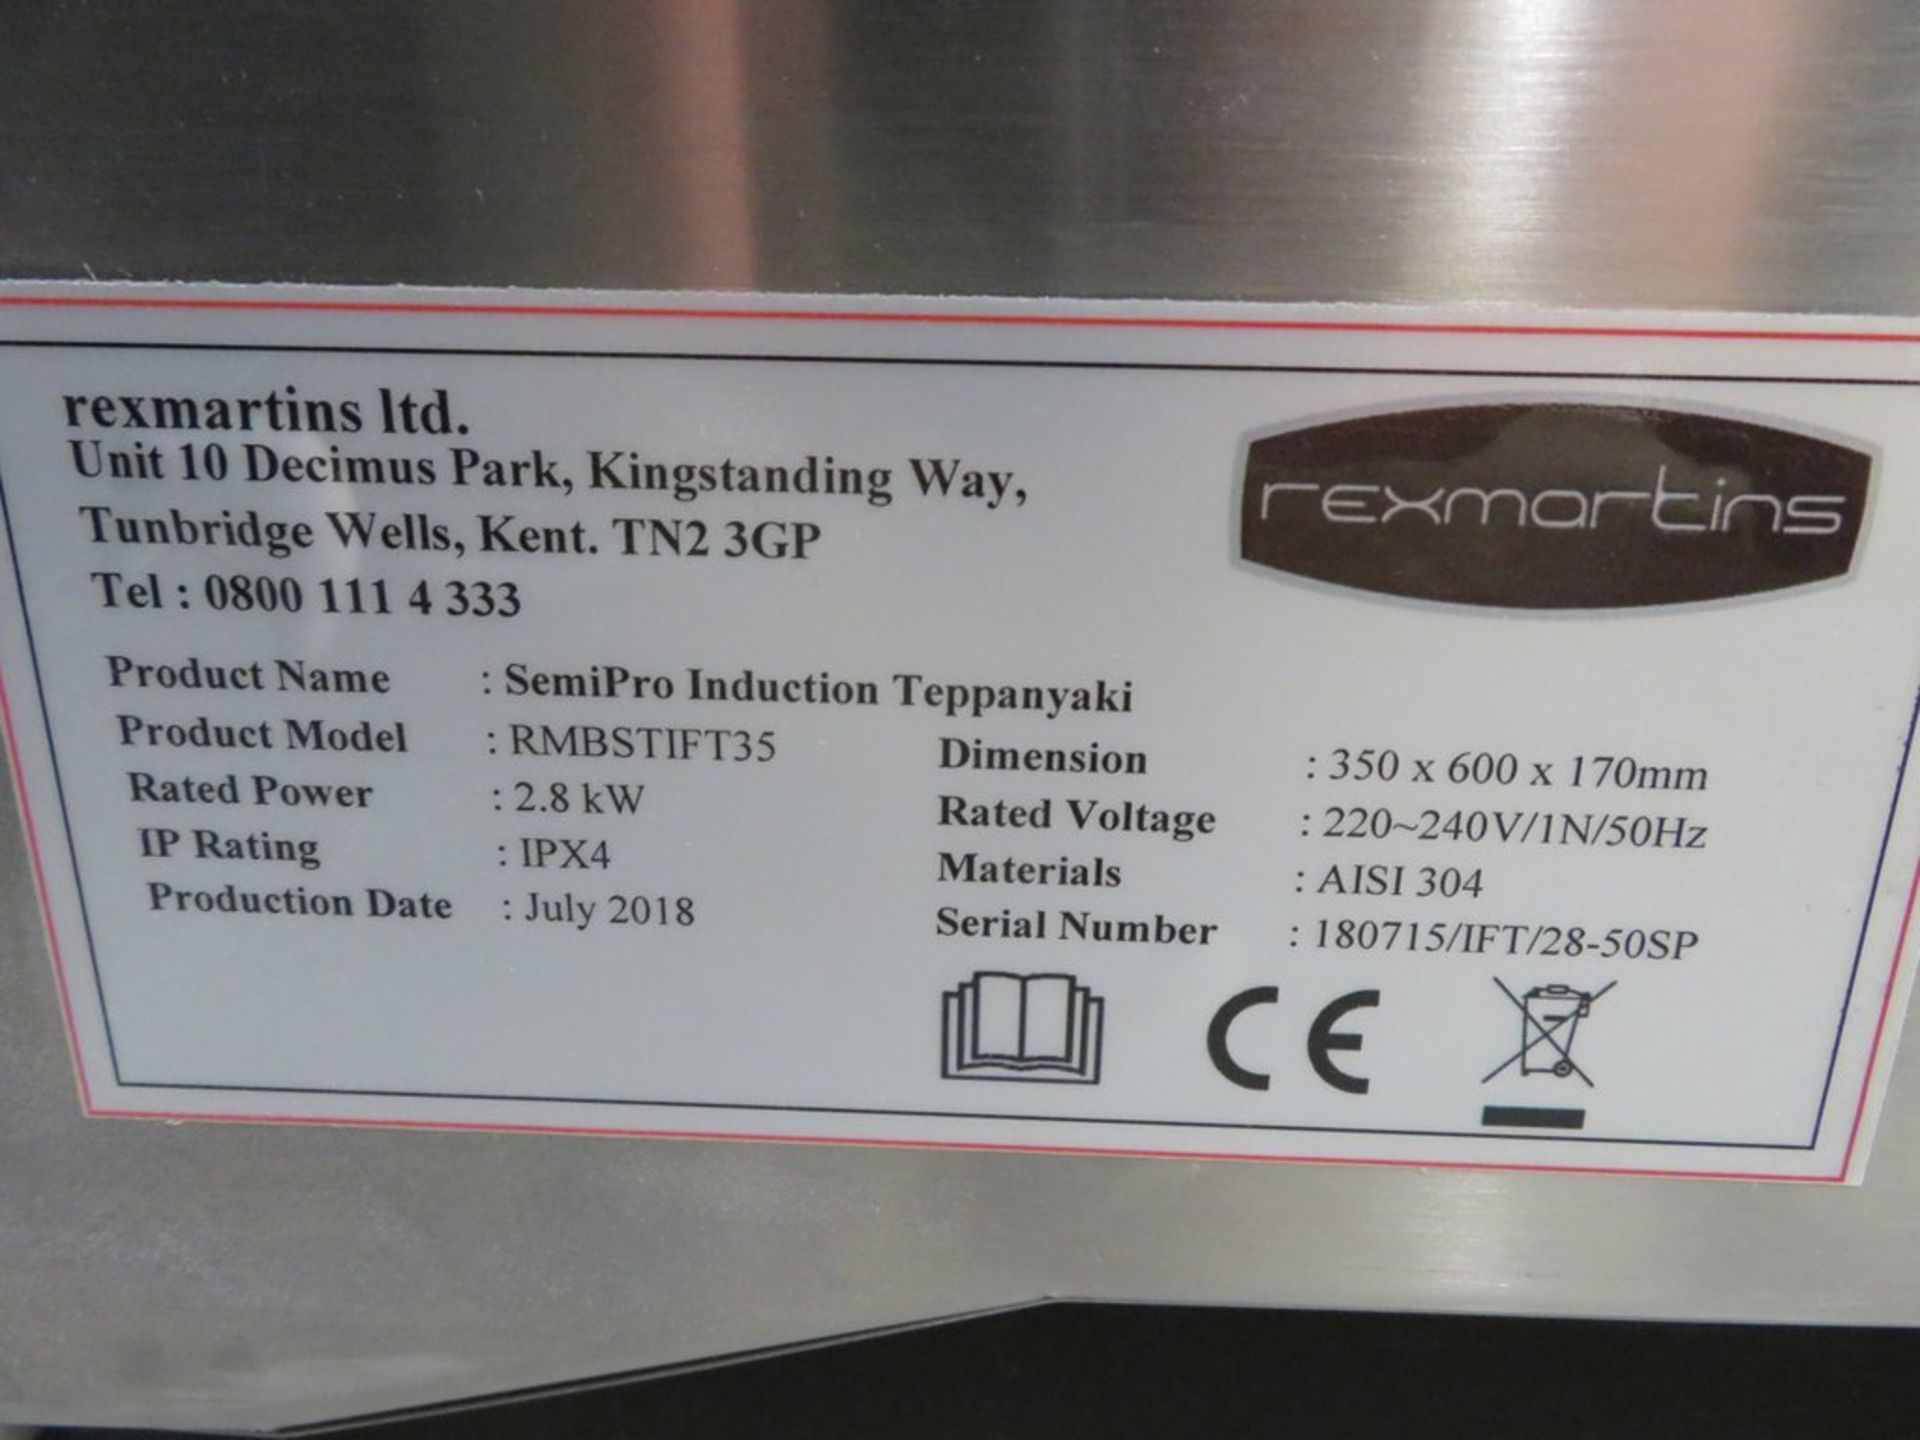 SemiPro countertop induction Teppanyaki, model RMBSTIFT35,1 phase - Image 7 of 7